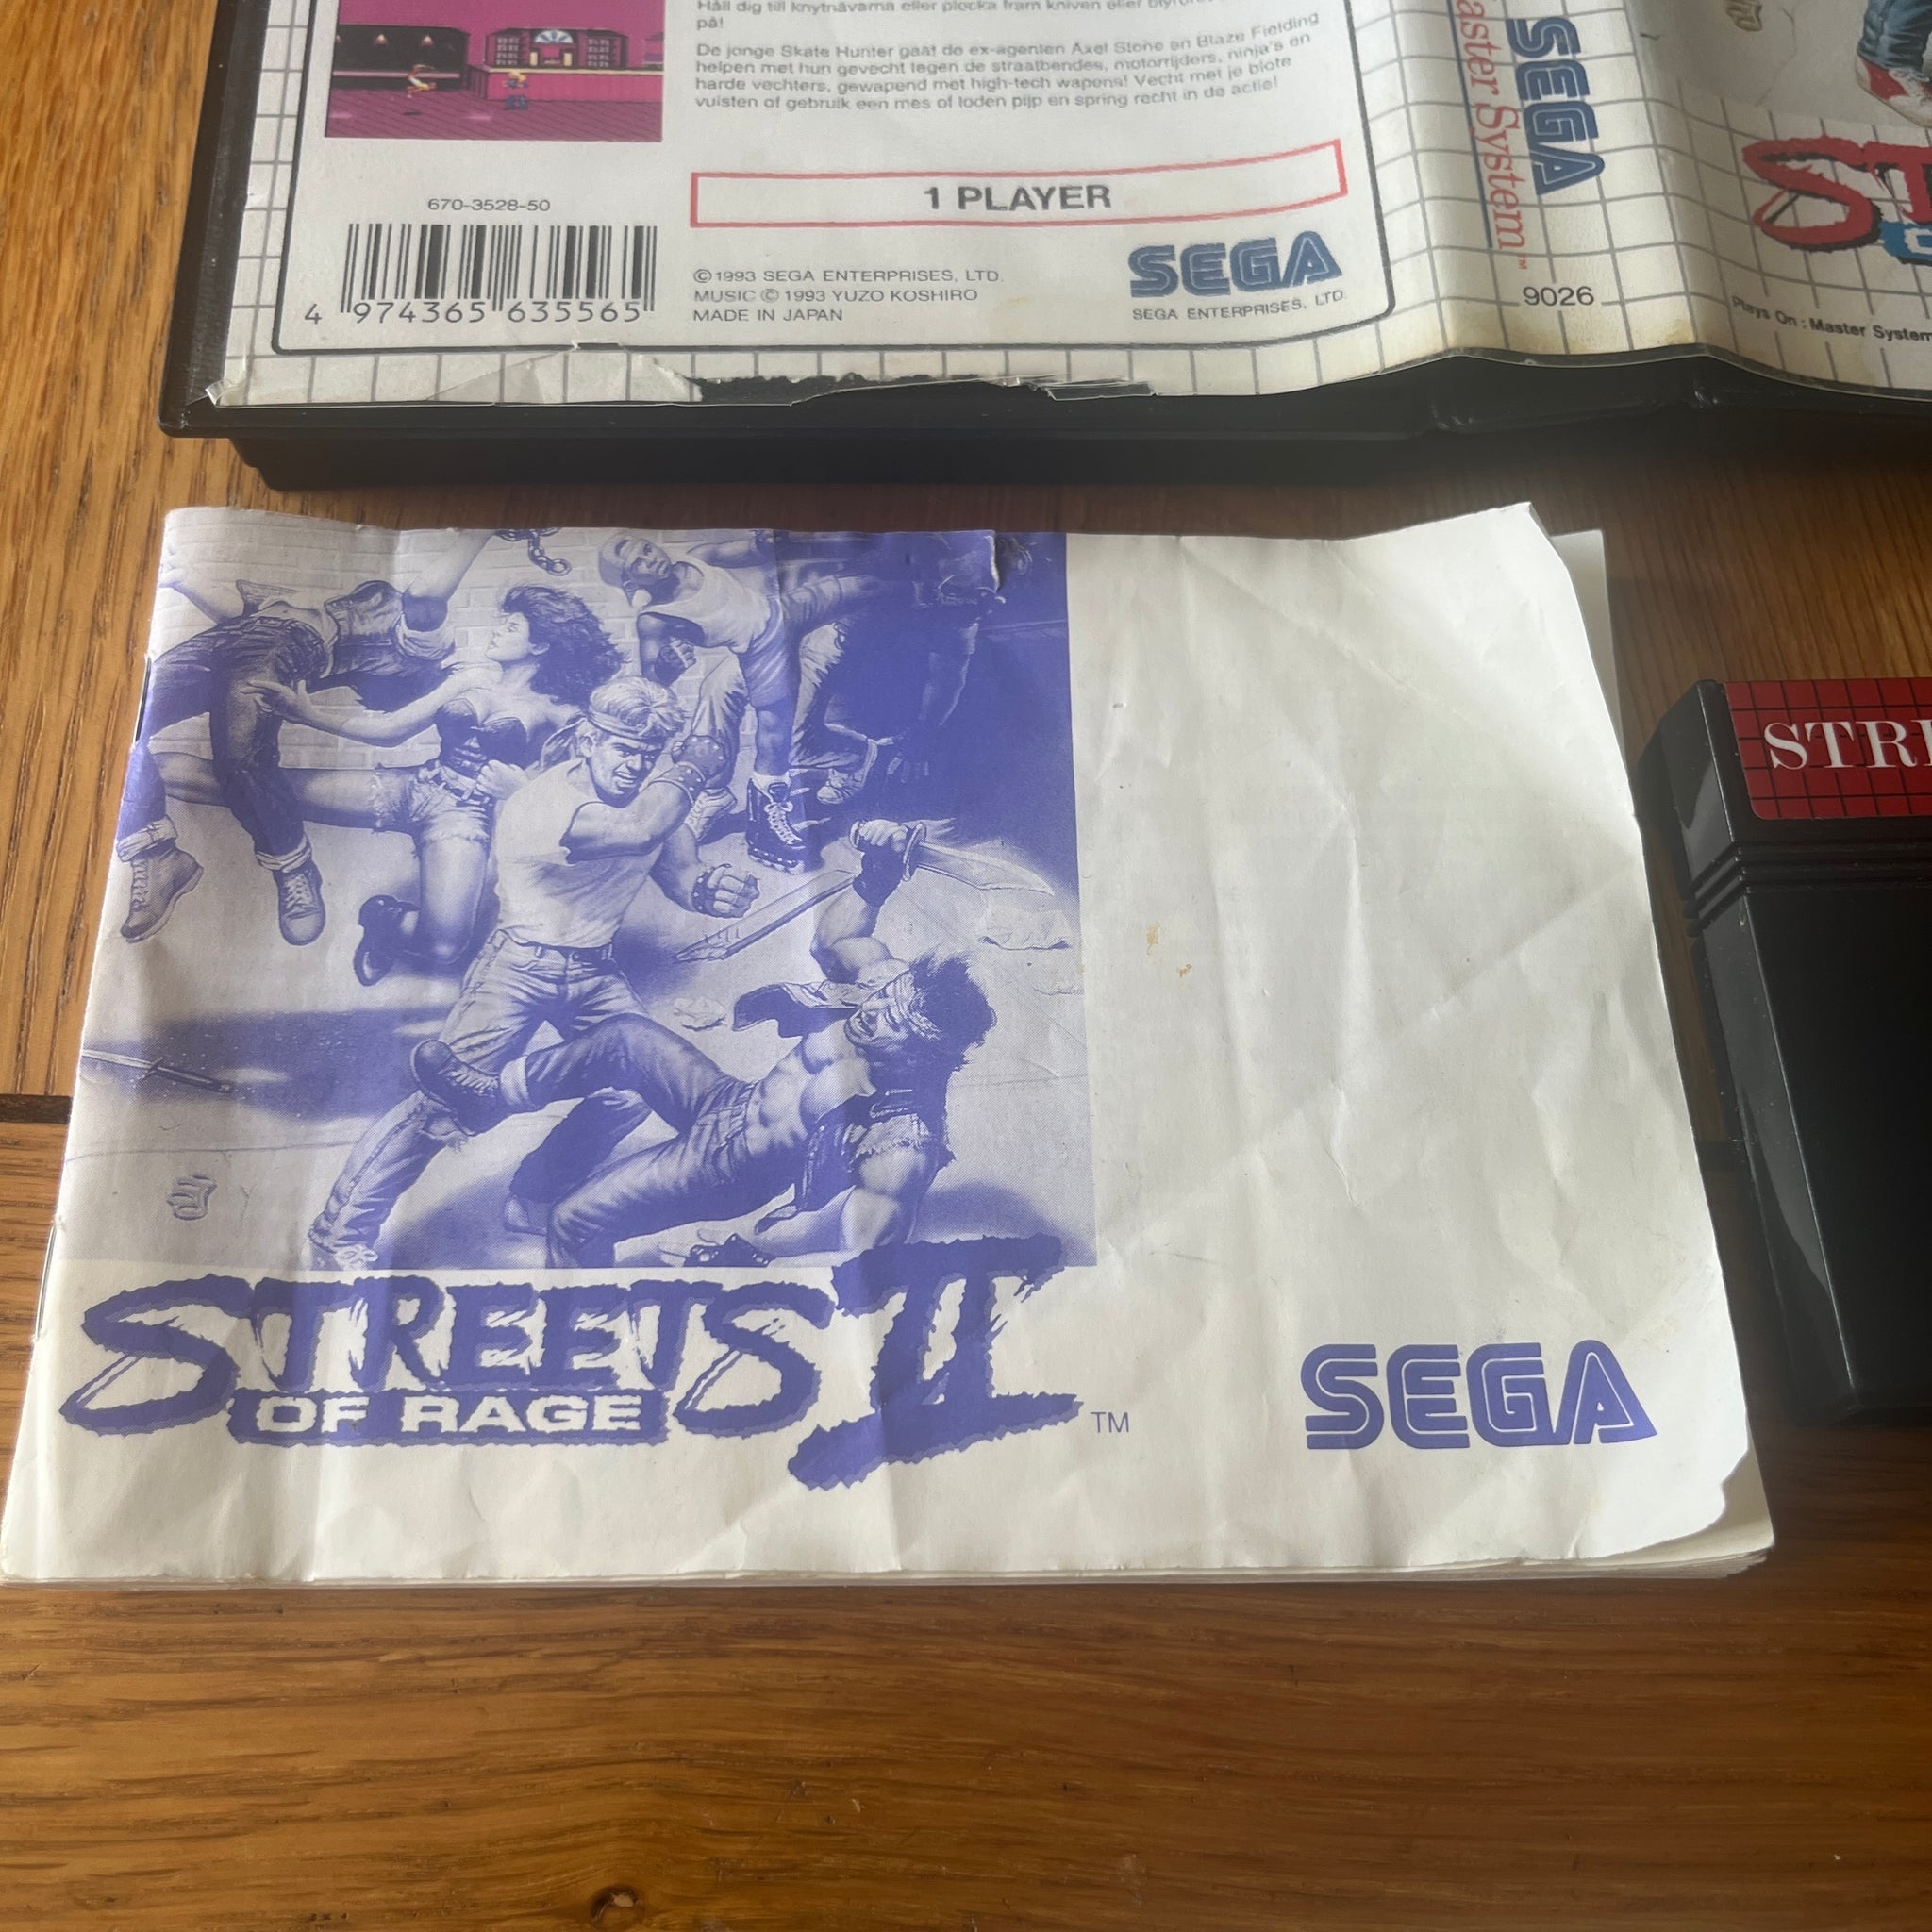 Streets of Rage II Sega Master System game